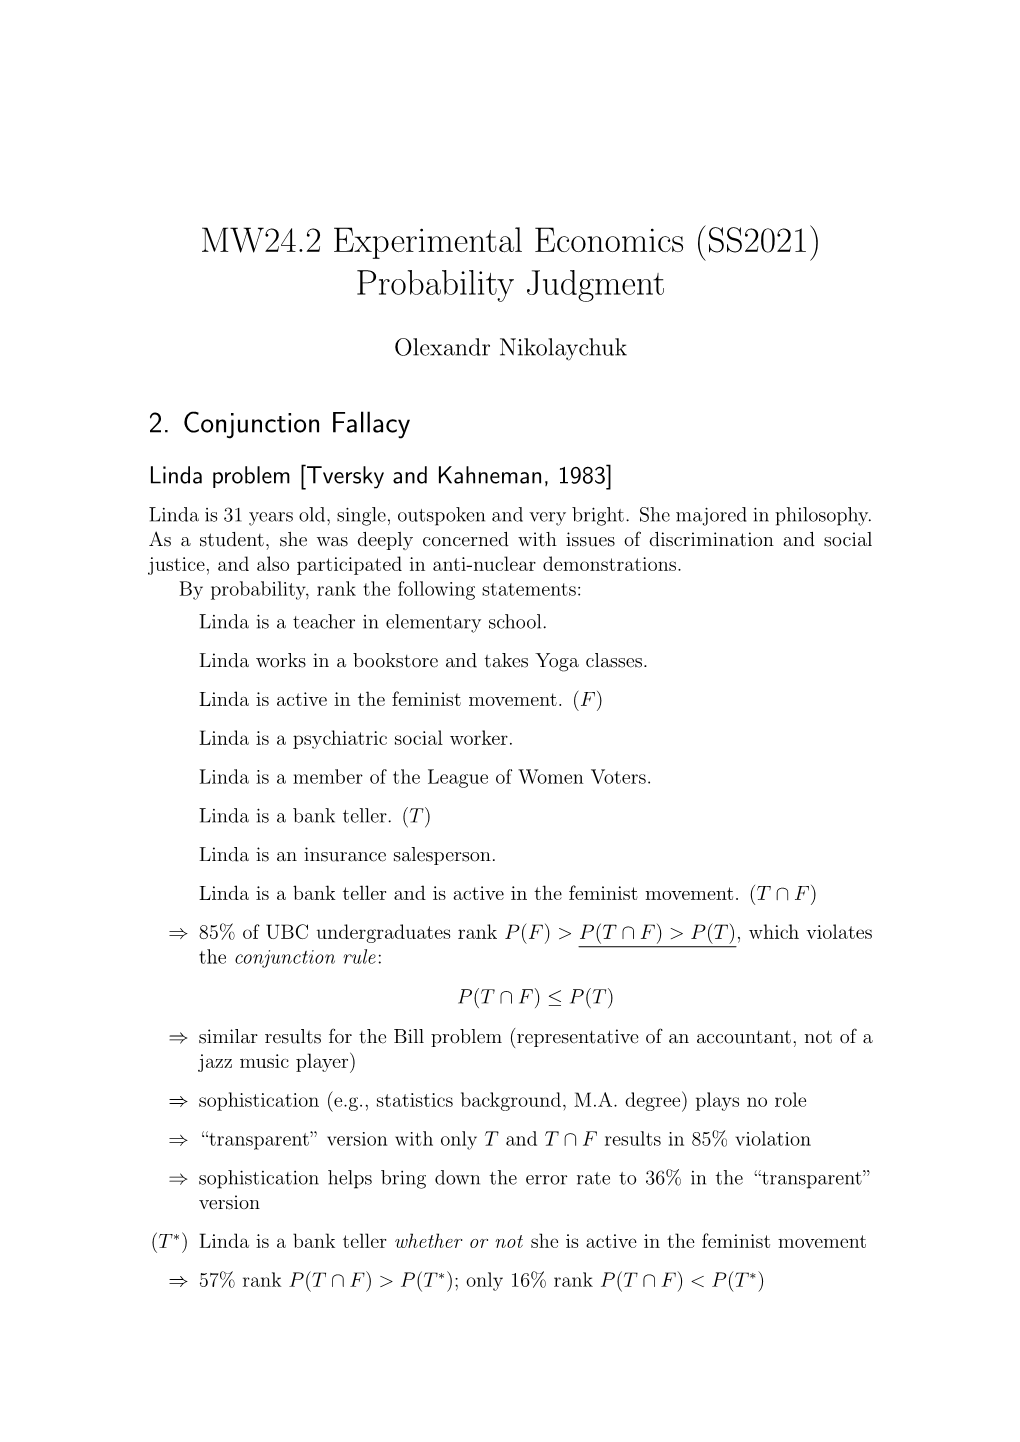 MW24.2 Experimental Economics (SS2021) Probability Judgment